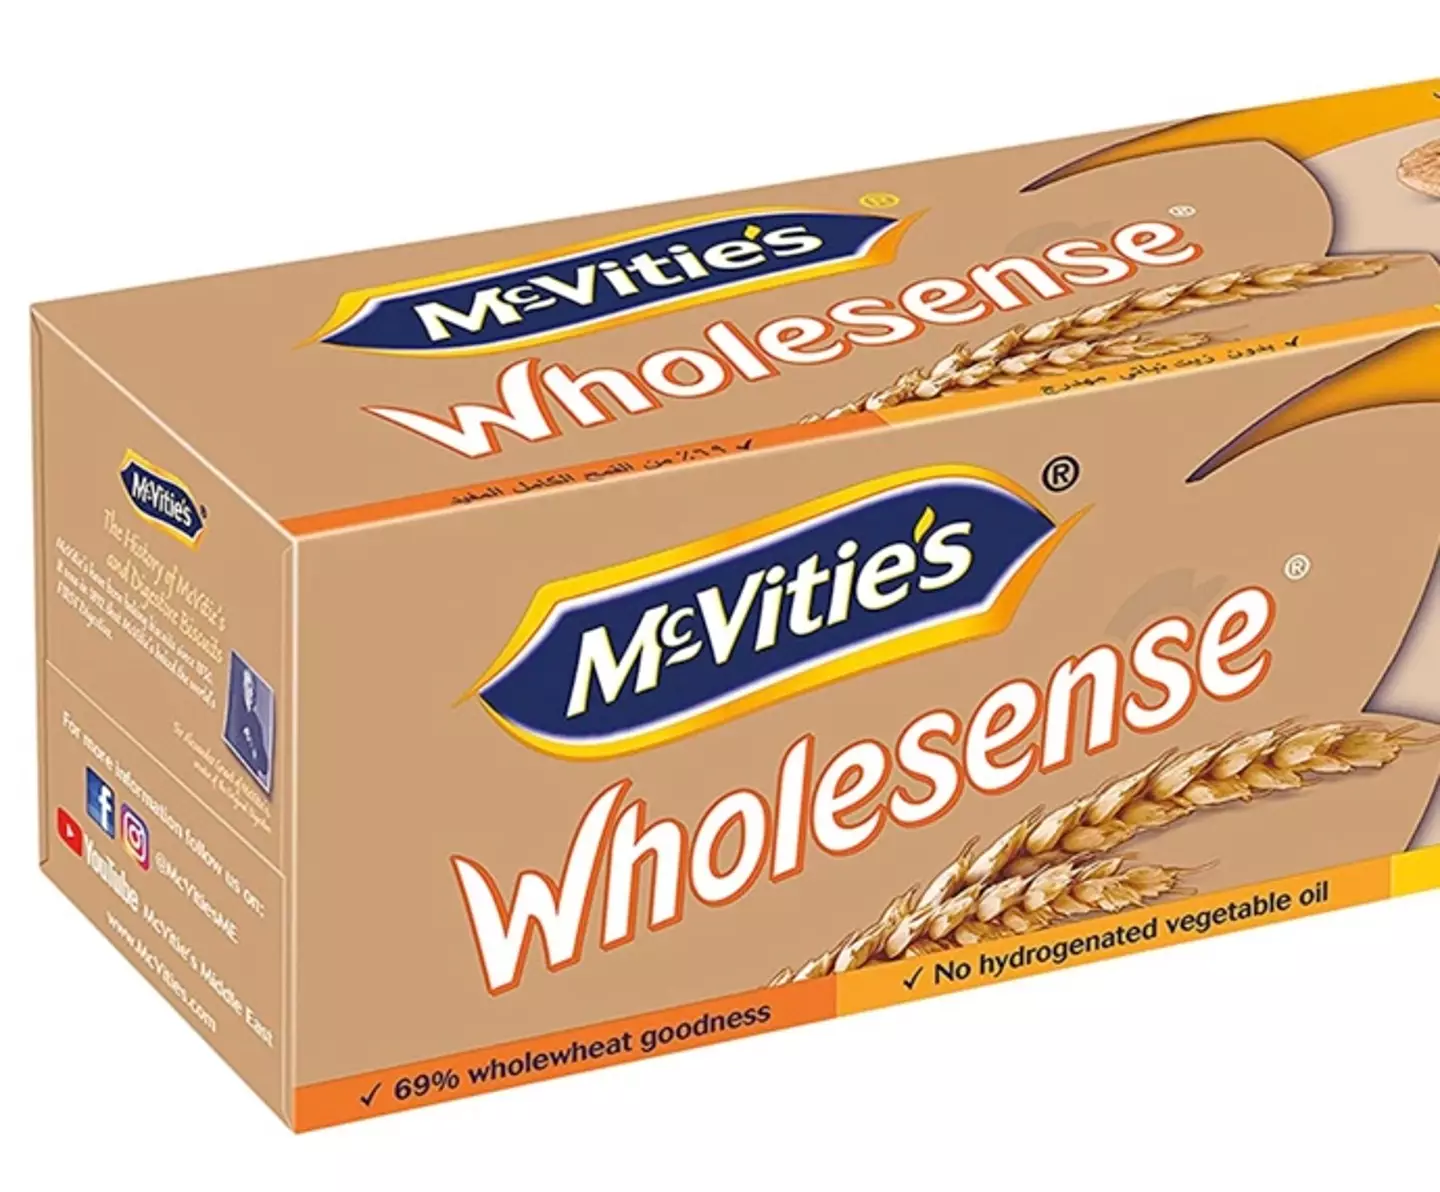 McVitie's Wholesense Digestives contain less sugar.